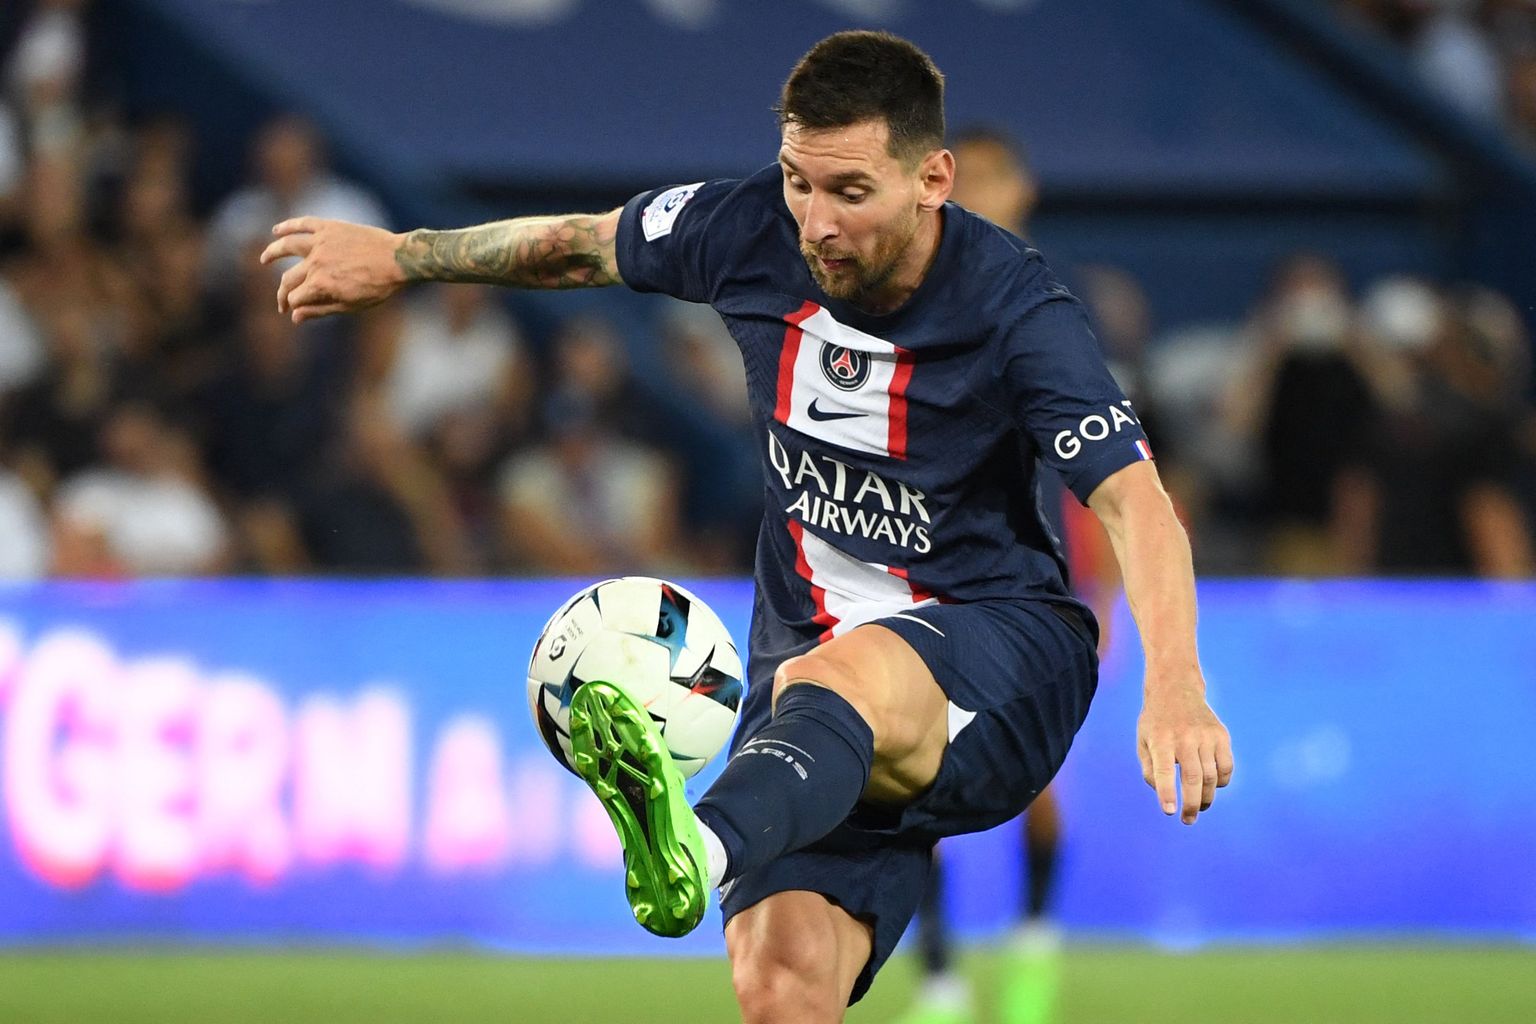 Prantsuse klubi Paris Saint-Germain argentiinlasest ründaja Lionel Messi löömas 13. augustil 2022 palli Pariisis Parc des Princes staadionil mängus Montpellier Herault SC-ga. Paris Saint-Germain võitis 5:2